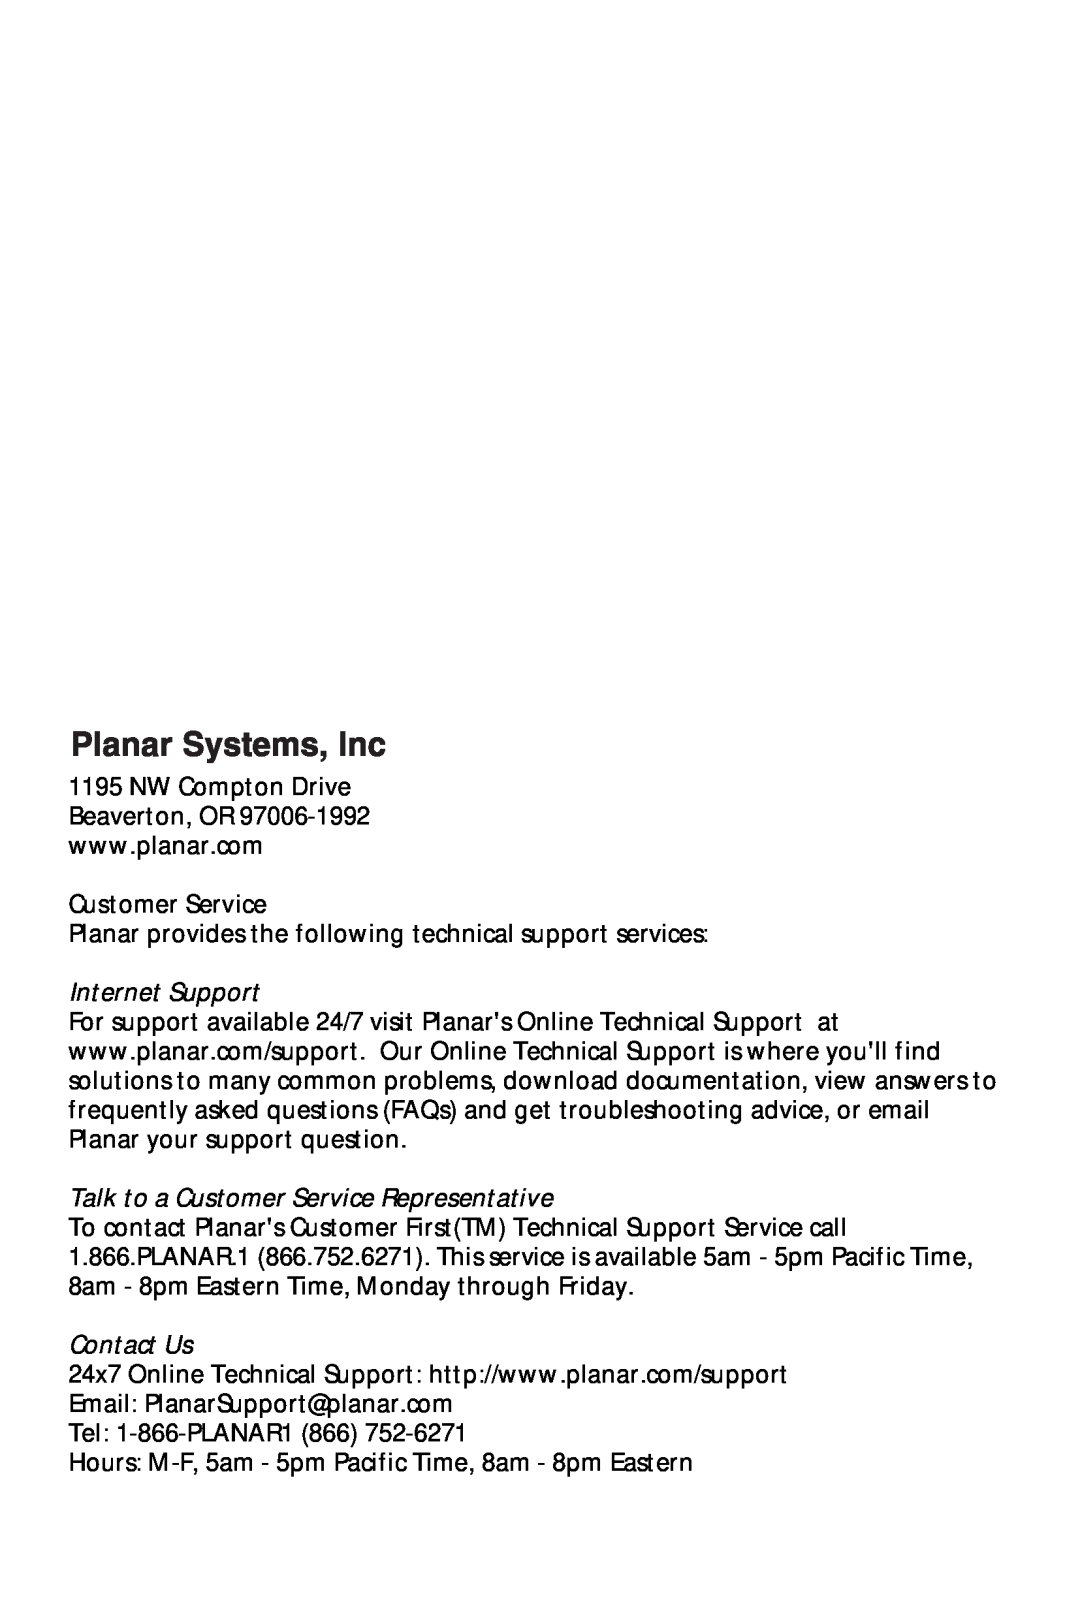 Planar PX2210MW manual Internet Support, Talk to a Customer Service Representative, Contact Us 